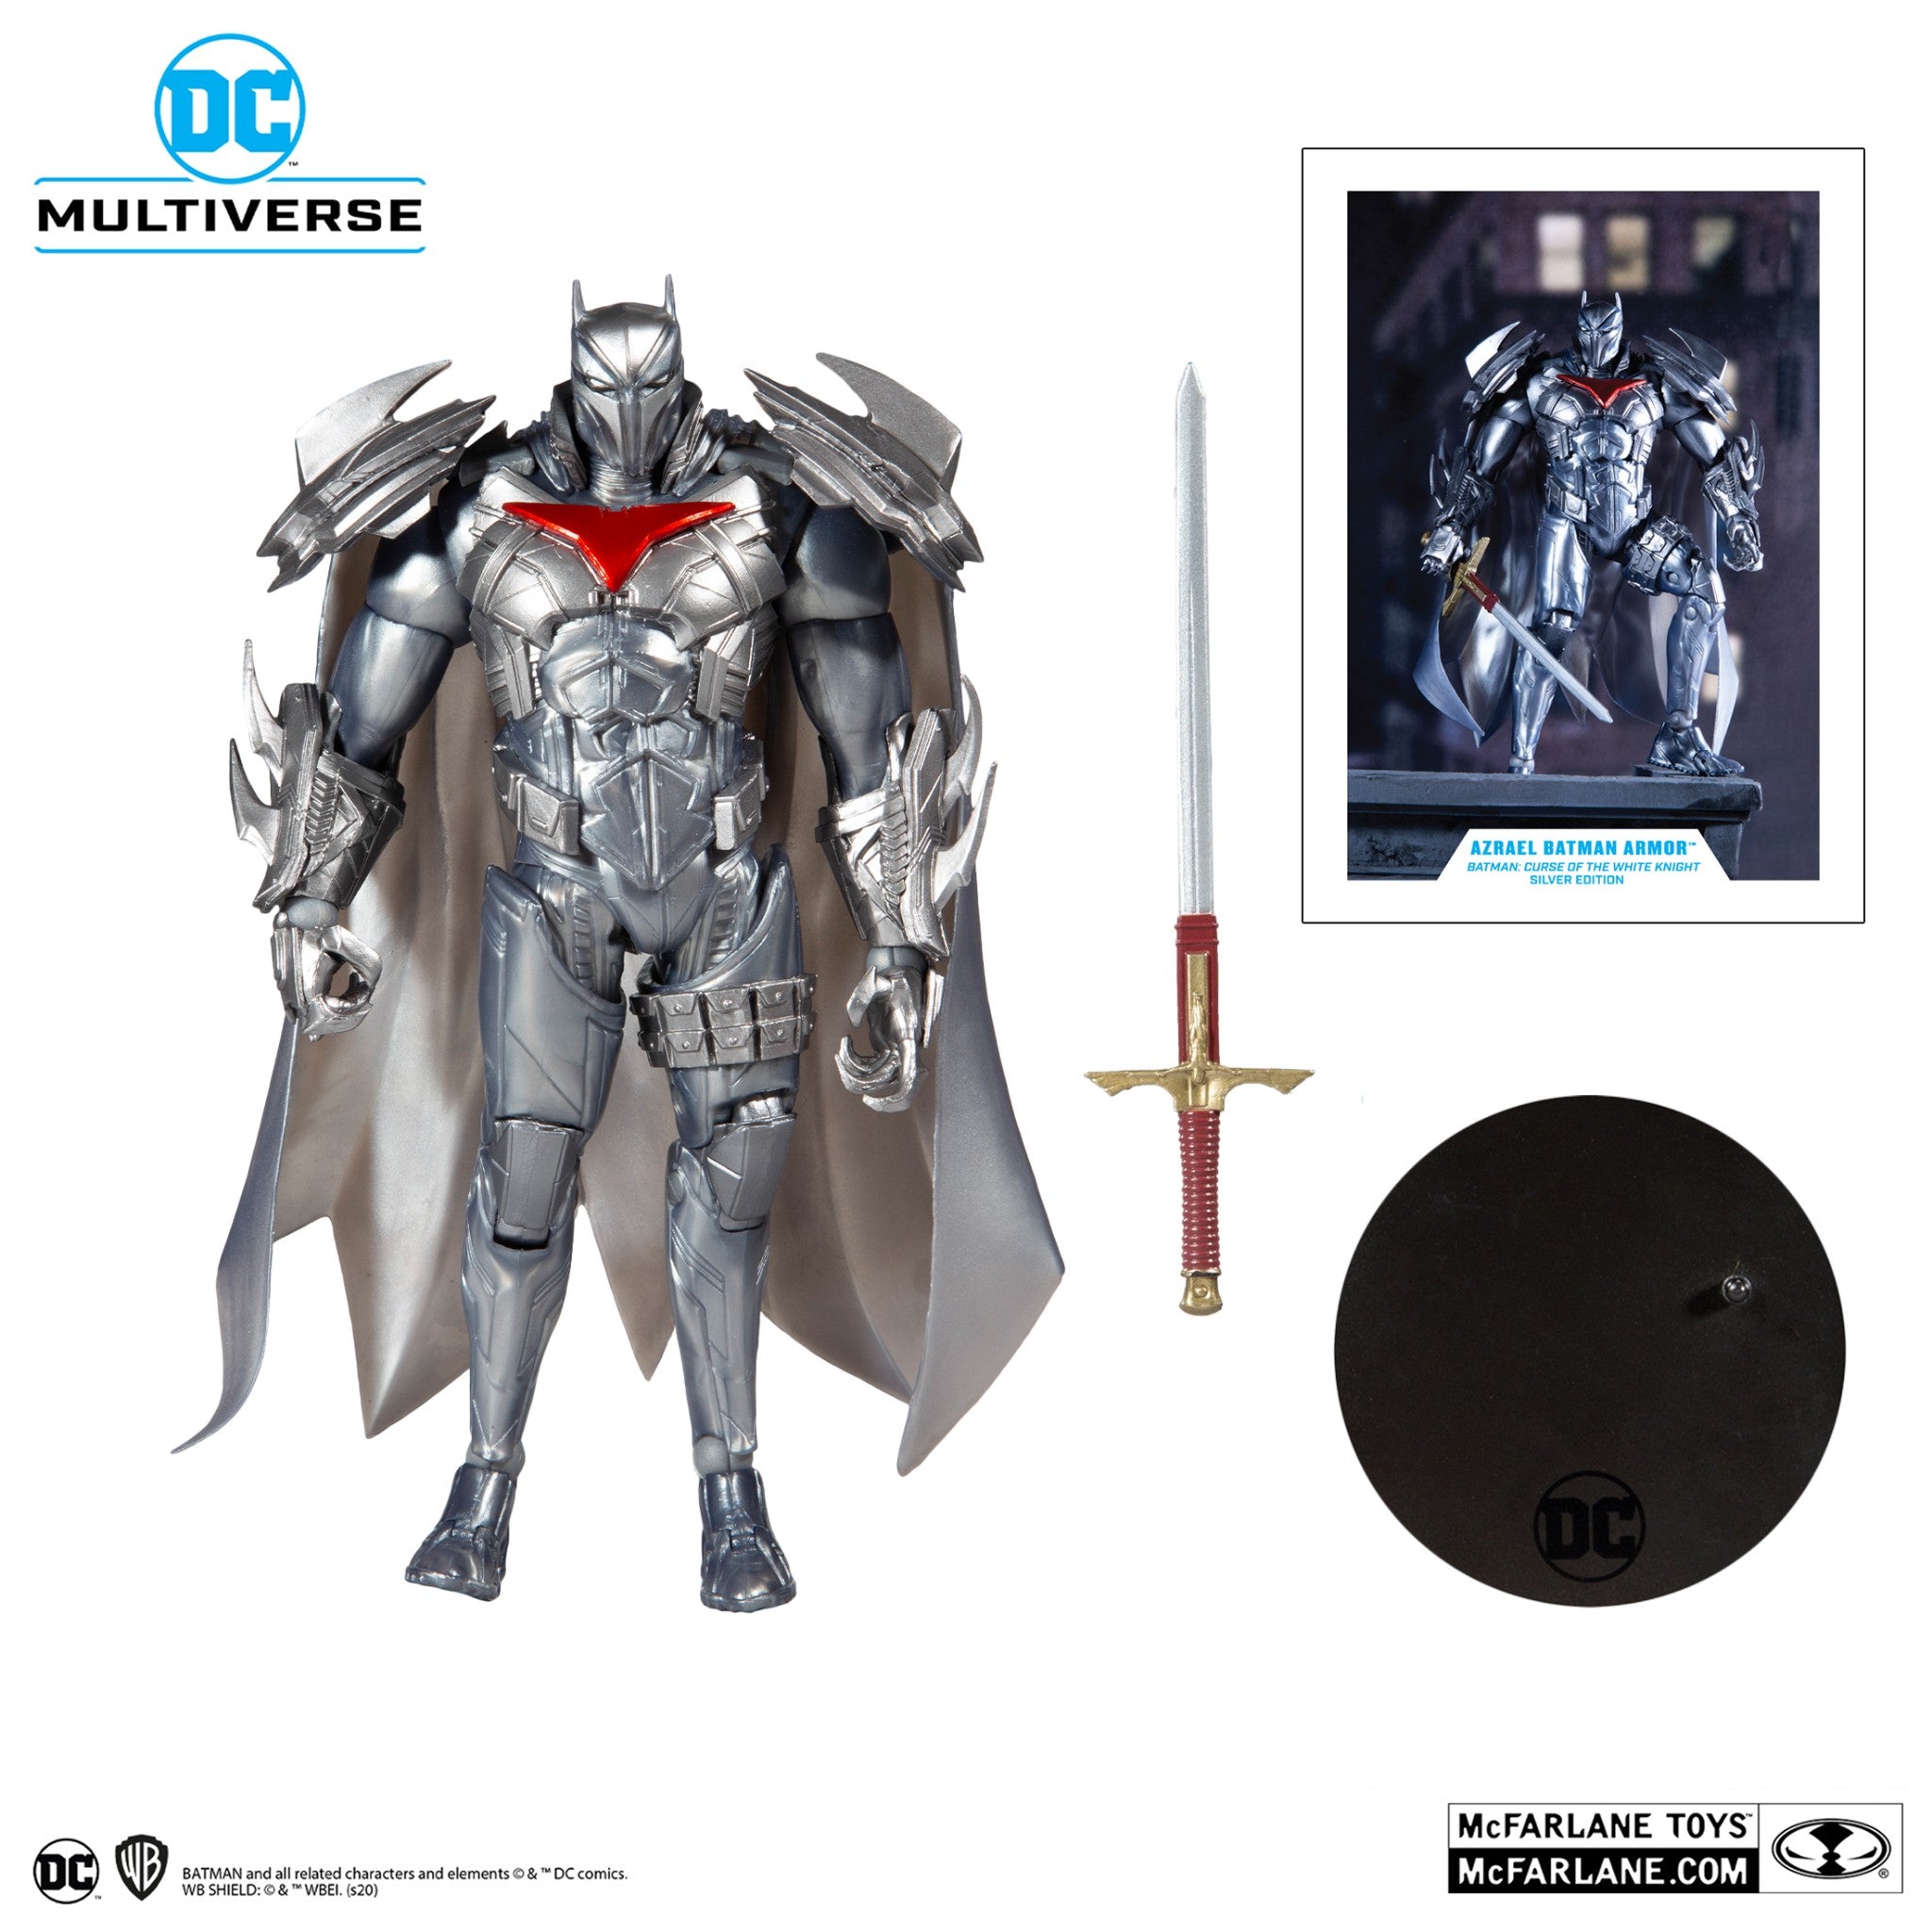 DC Multiverse Azrael Batman Armor Silver Edition Gold Label - McFarlane Toys